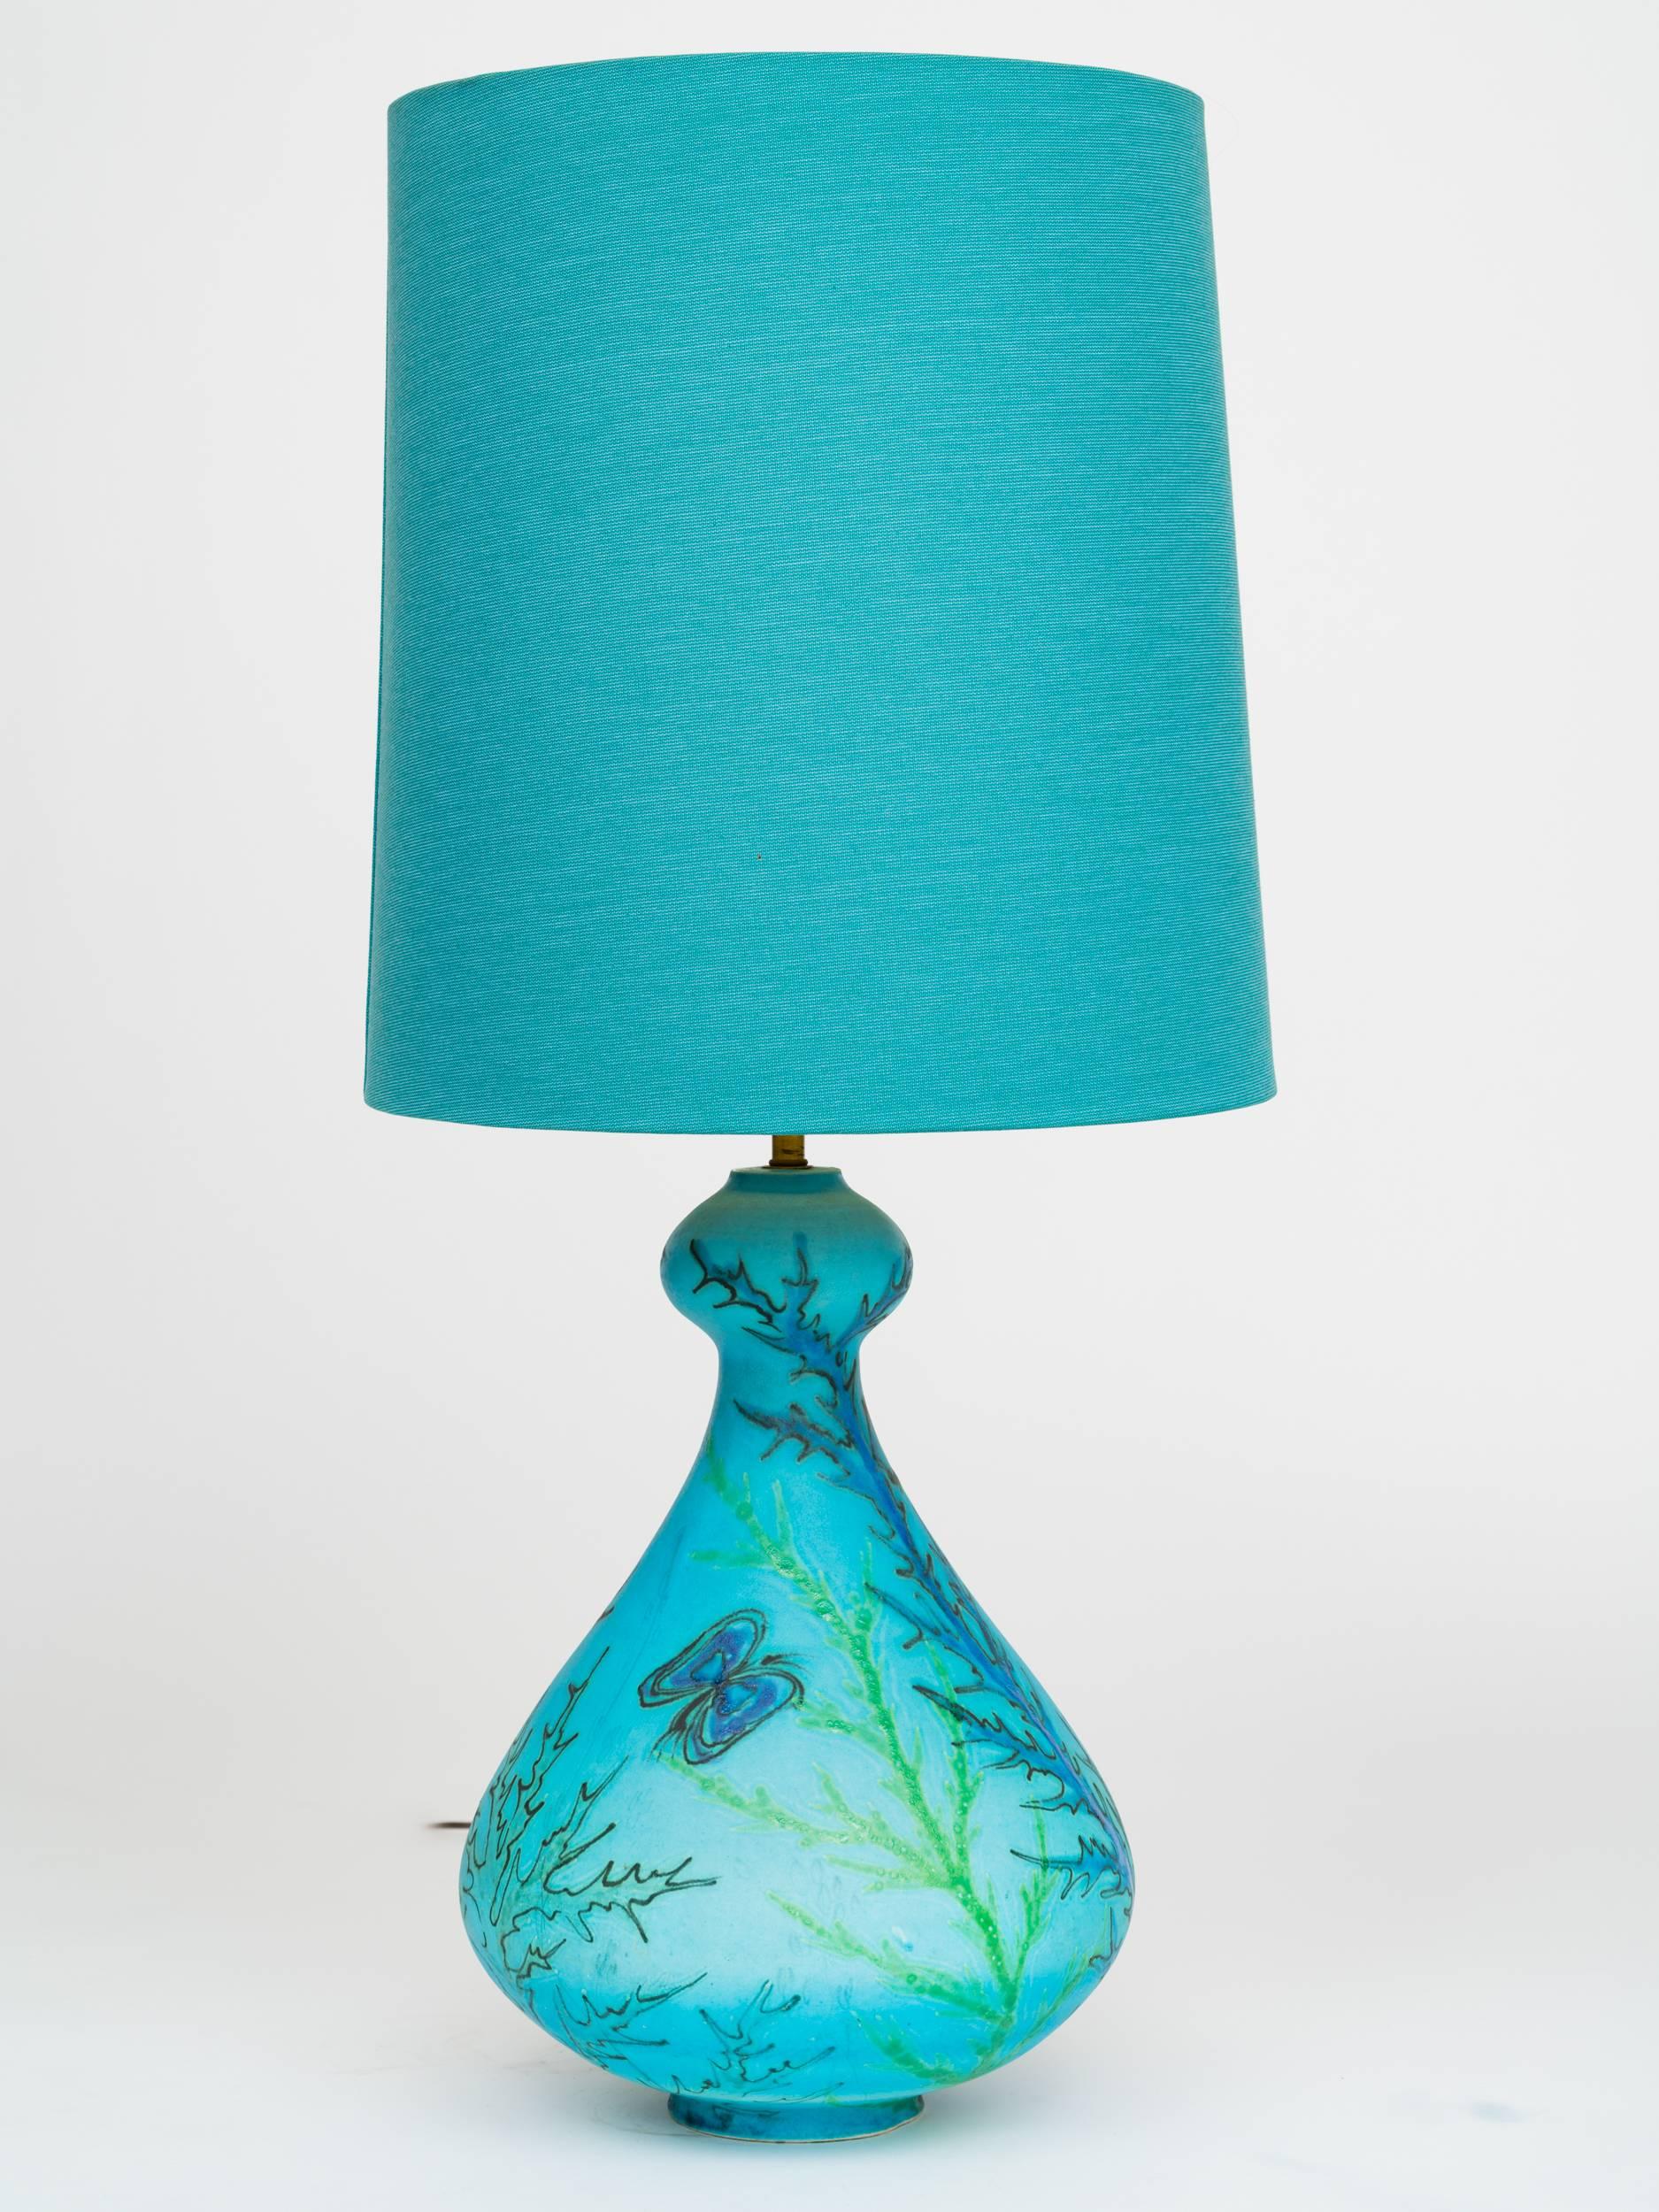 Large Raymor 1960s Italian Turquoise Ceramic Lamp 2